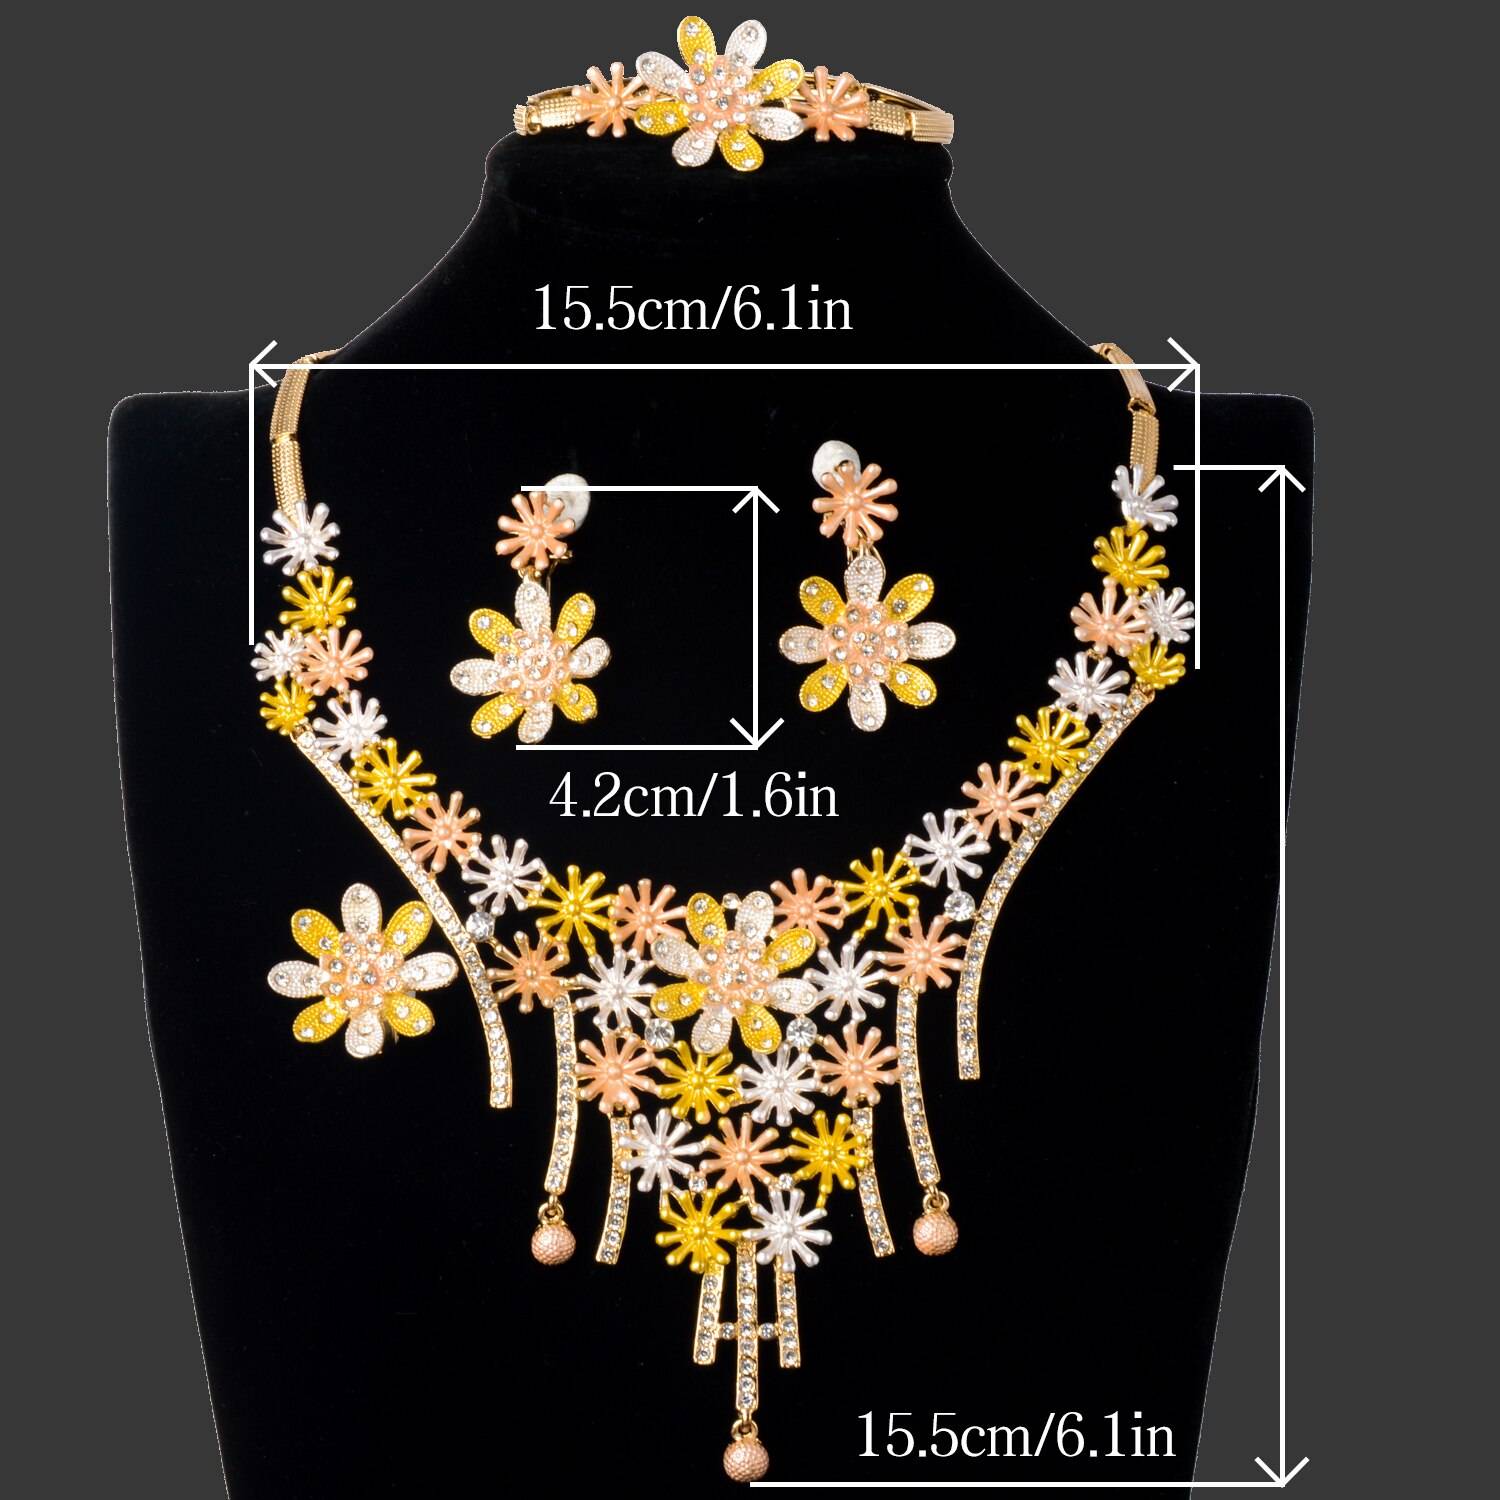 ZEADear Jewelry Sets Hot Sale Bridal Wedding Three Tone Flower Shape Earrings Necklace Bracelet Ring For Women Romantic Gift Wedding Jewellery Set 8d255f28538fbae46aeae7: Jewelry Sets